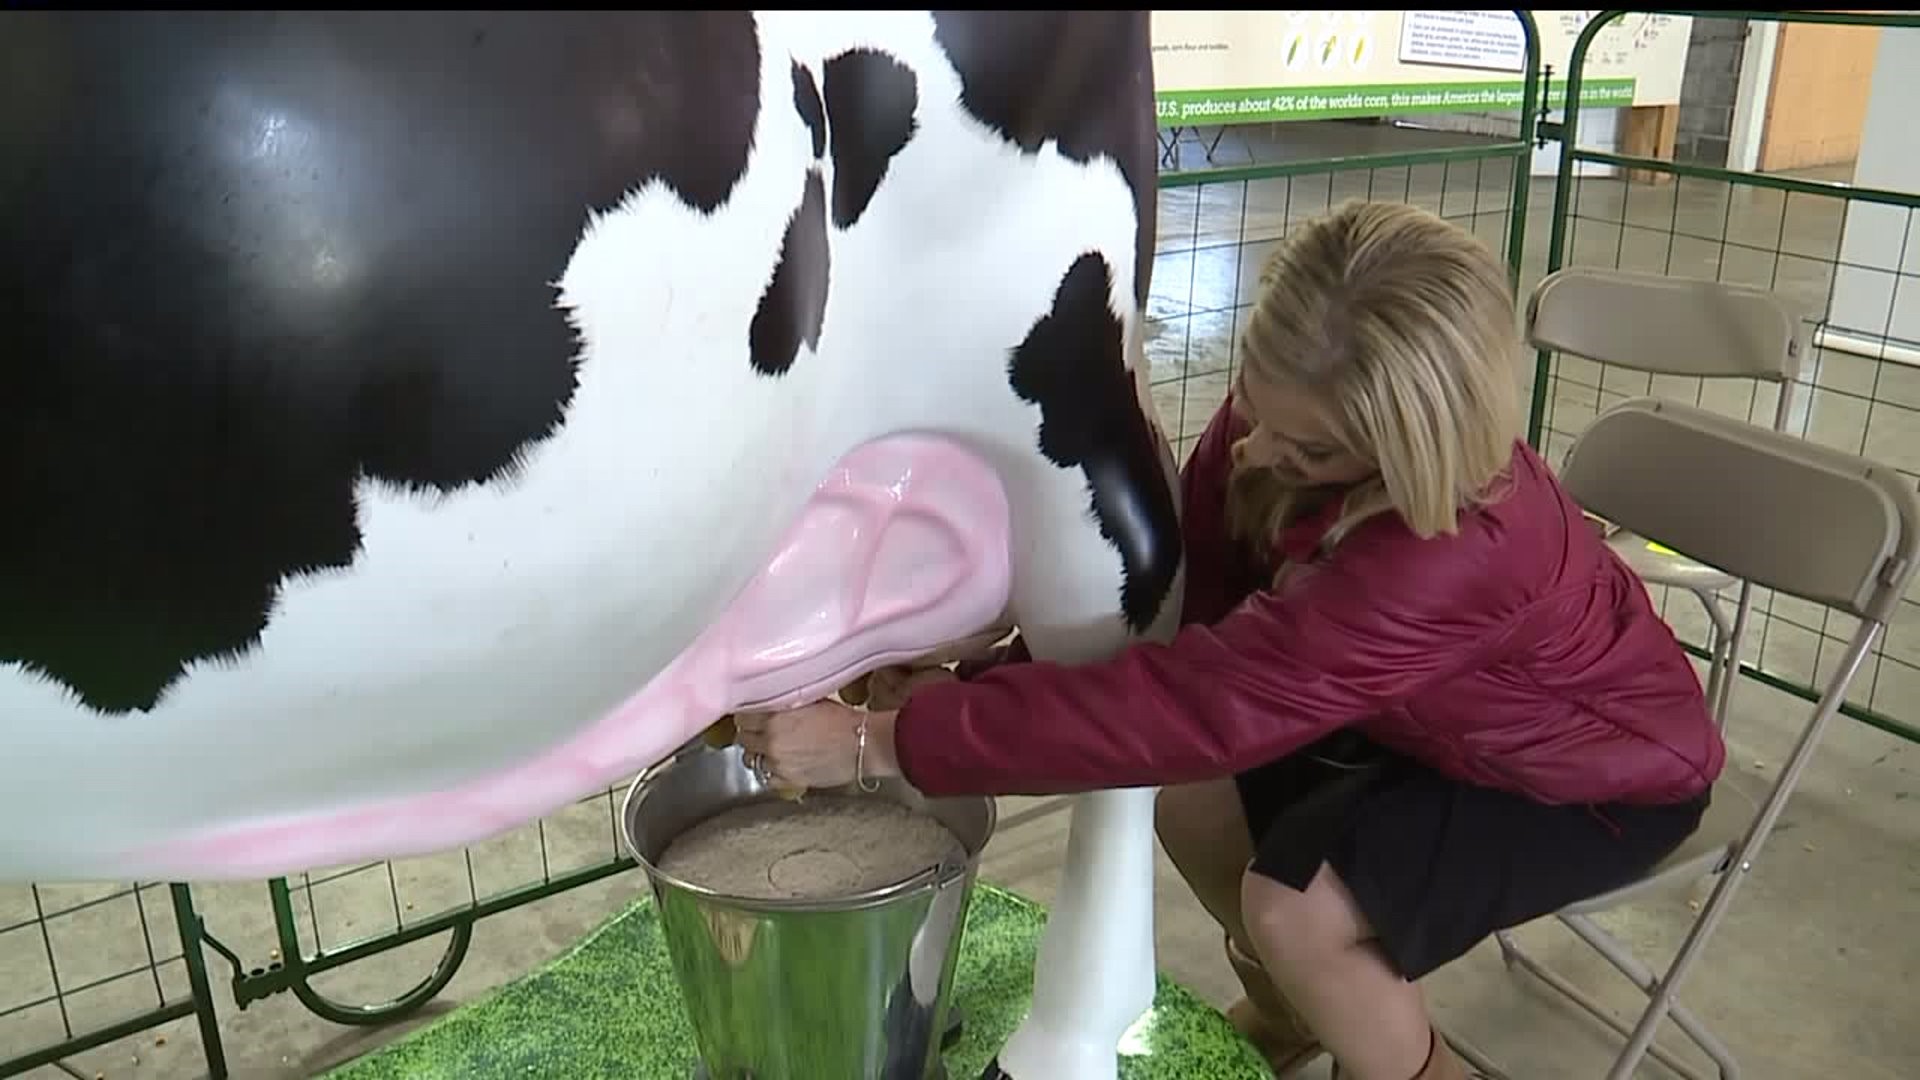 Agriculture Education Center Puts Fun In Fundamentals At York Fair